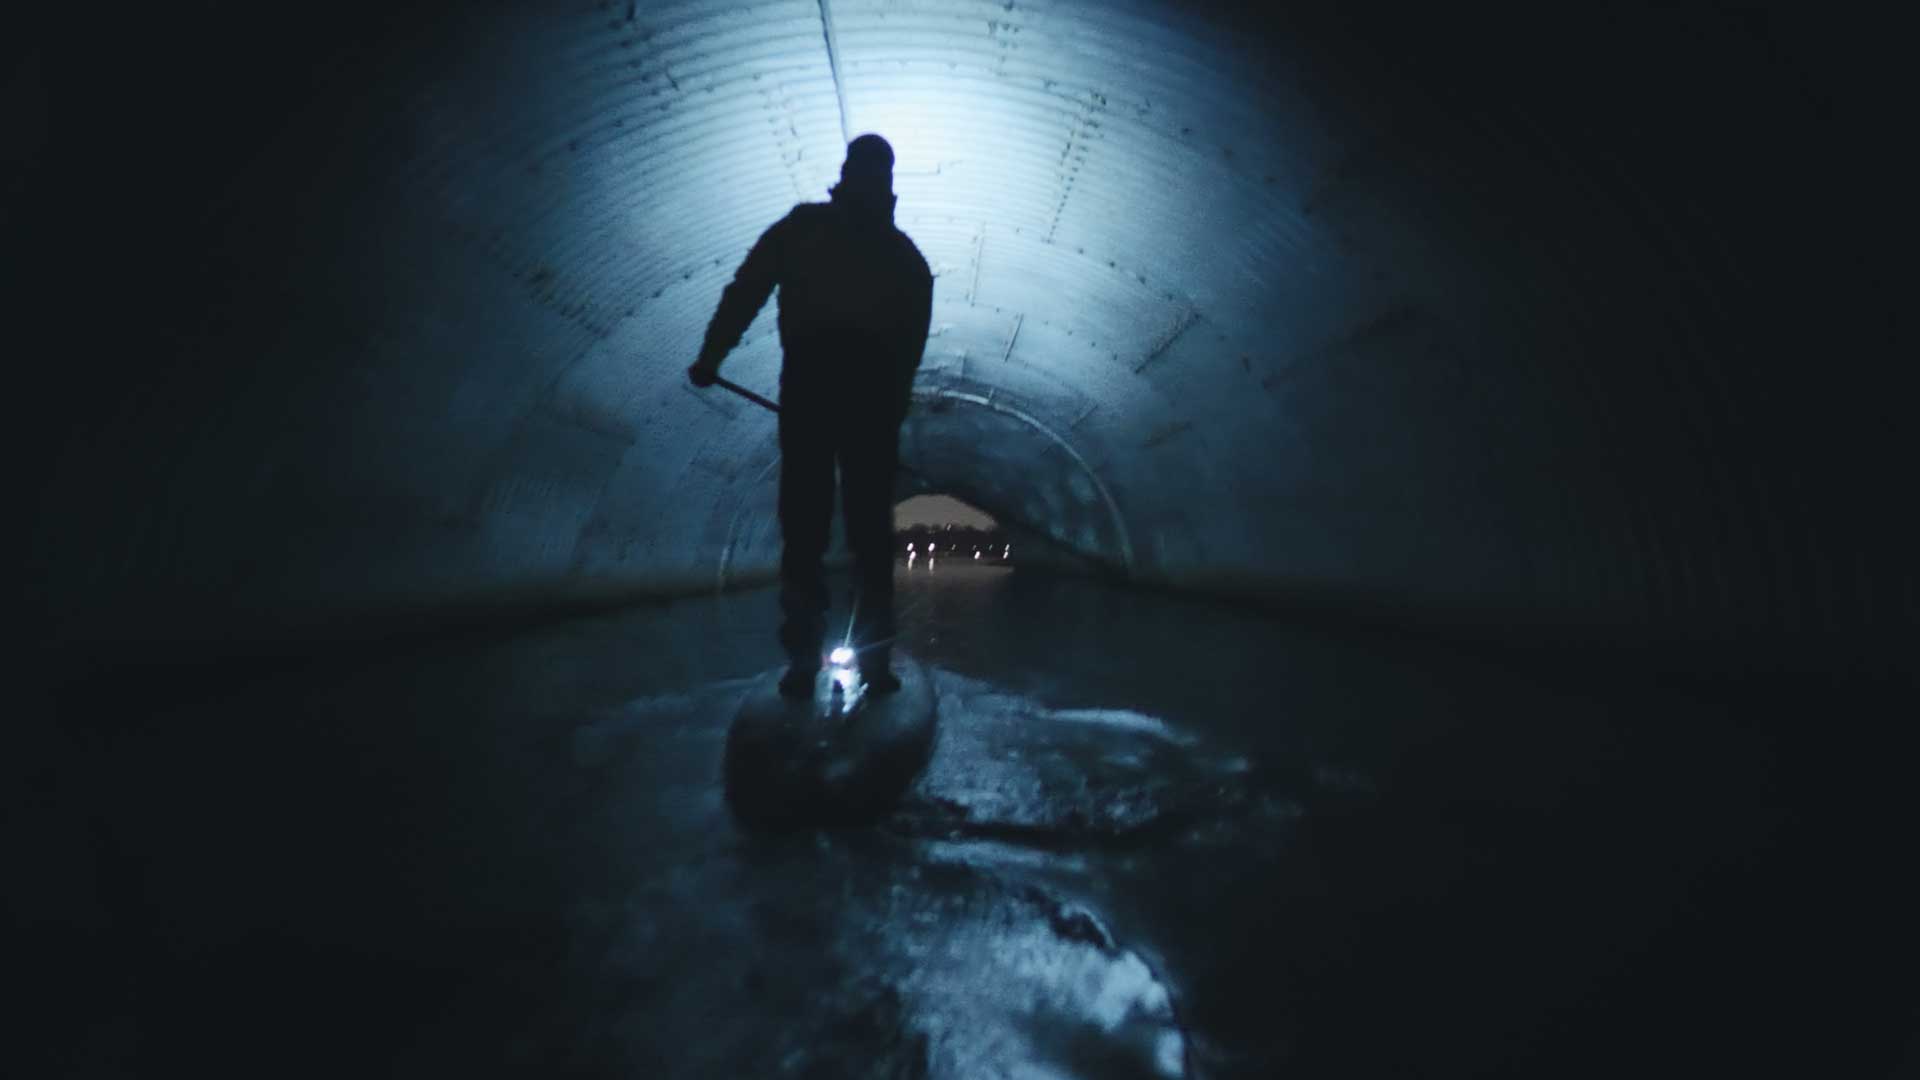 SUP Paddler gliding through a dark tunnel at night.